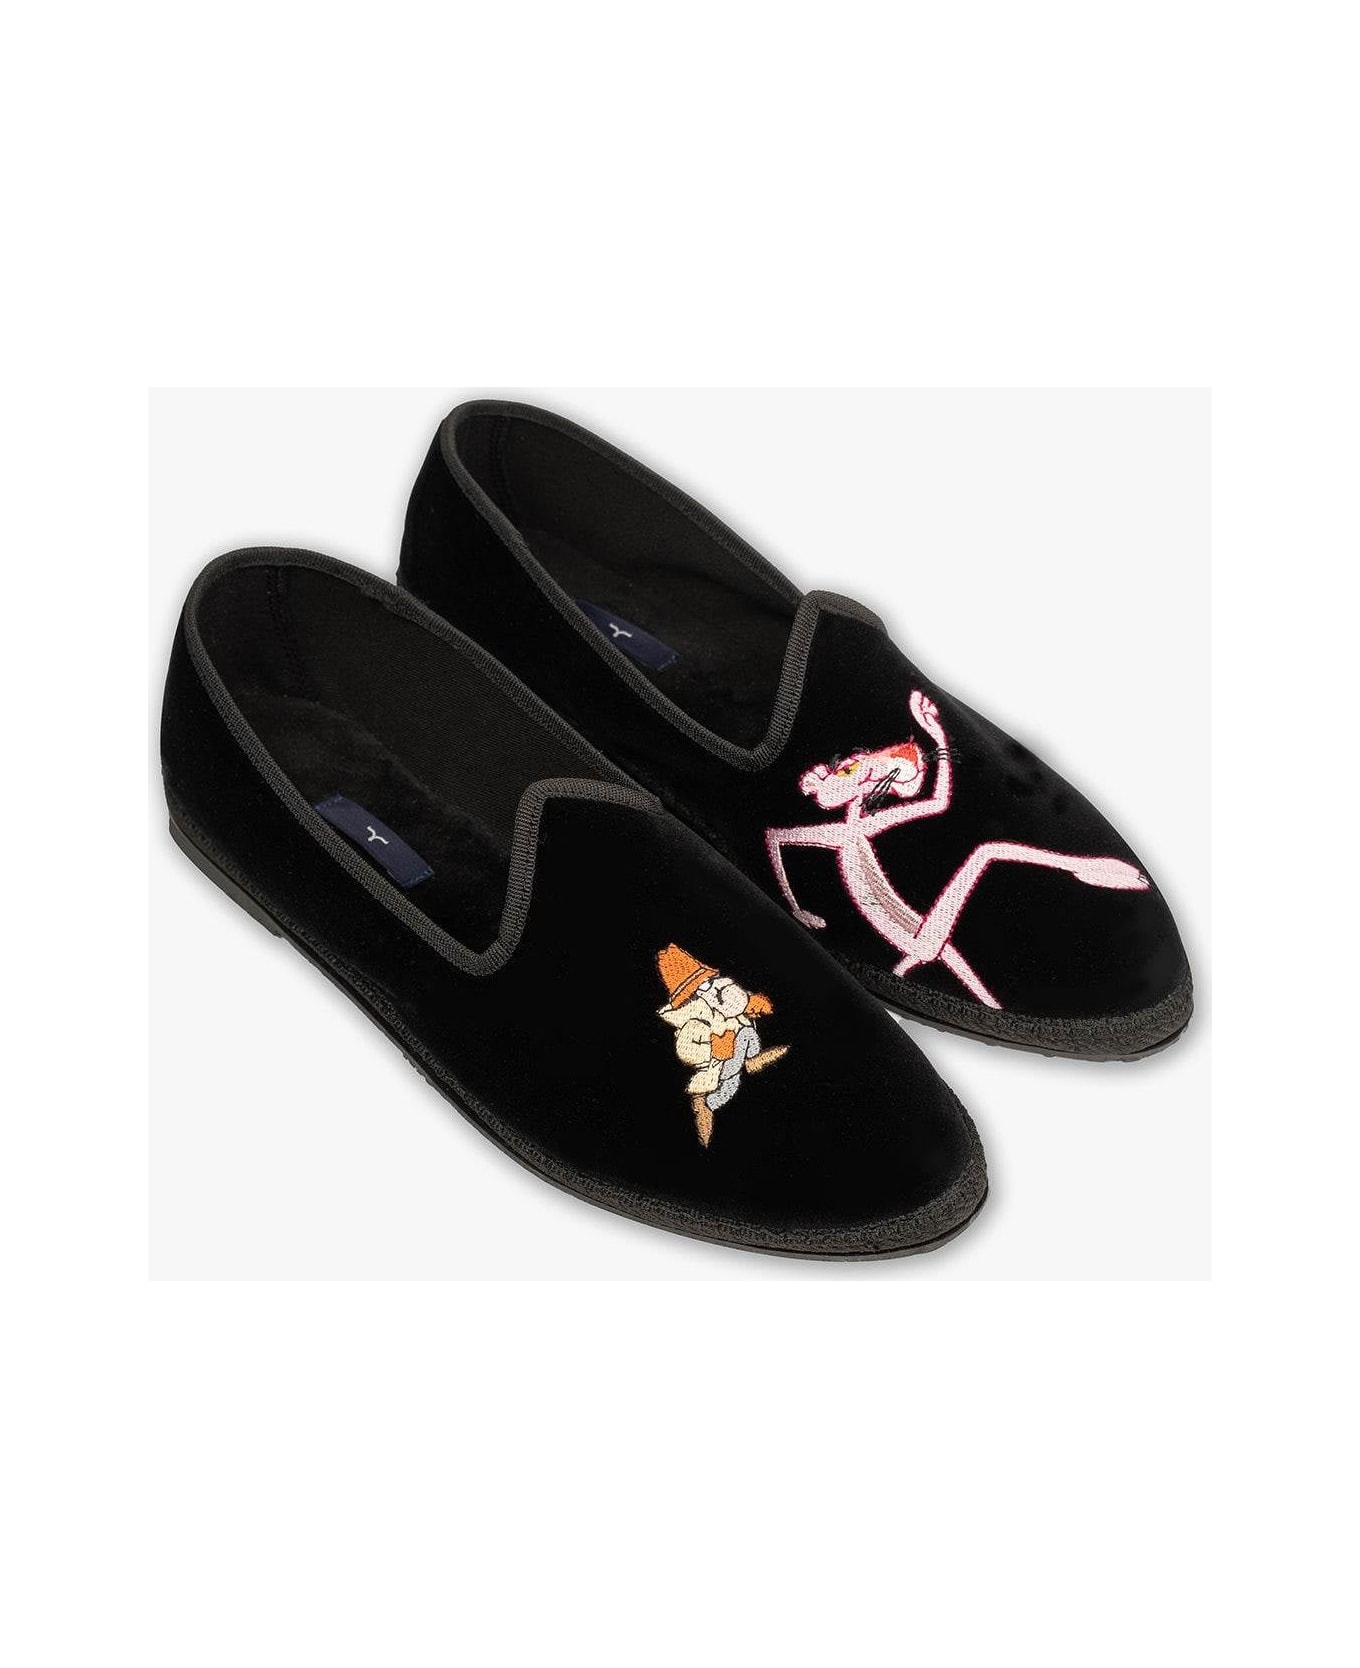 Larusmiani Friulana 'pink Panther' Shoes - Black